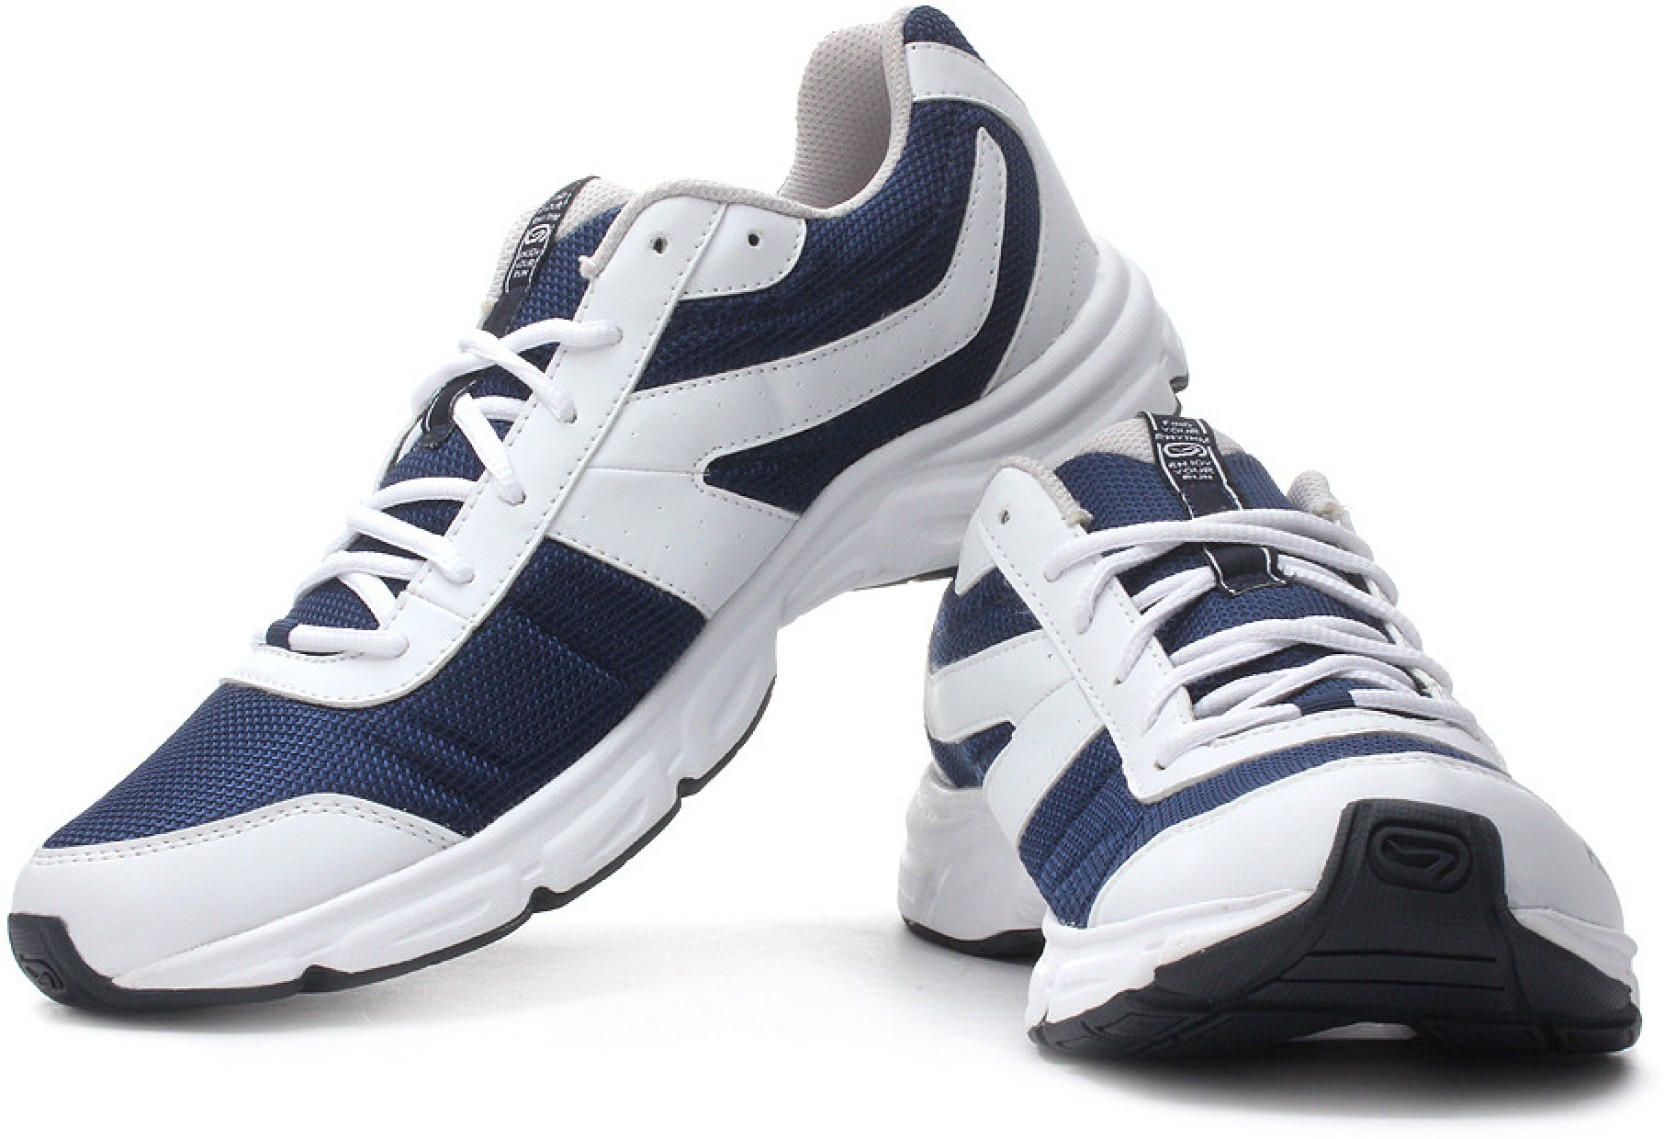 Kalenji by Decathlon Ekiden 50 Running Shoes - Buy Blue Color Kalenji ...